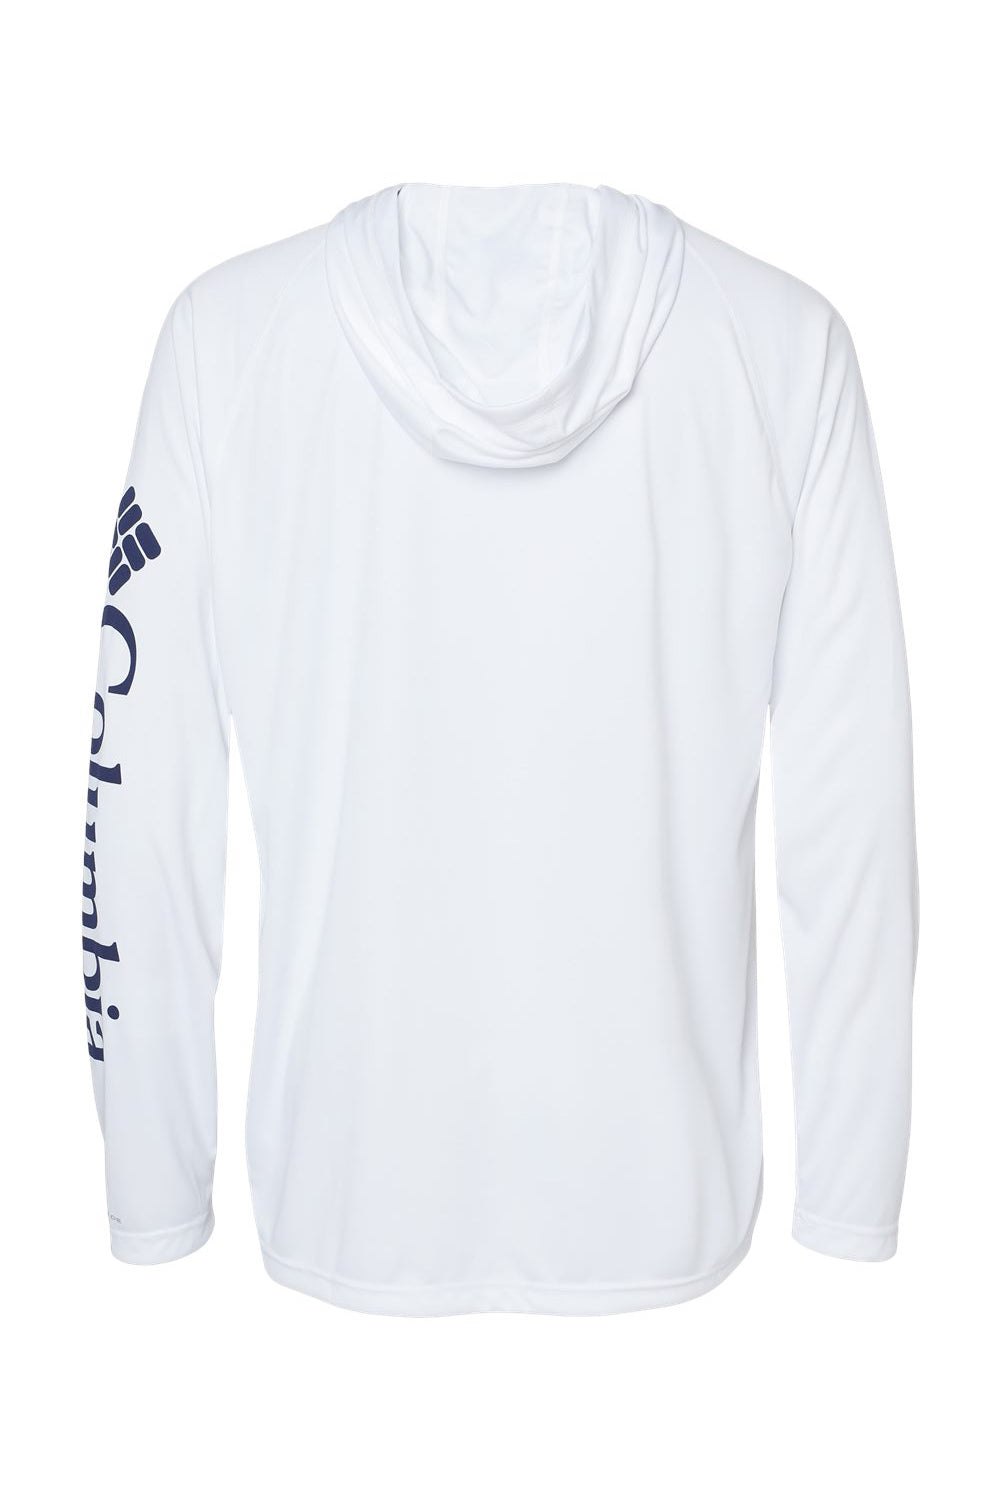 Columbia 153617 Mens PFG Terminal Tackle Long Sleeve Hooded T-Shirt Hoodie White/Nightshade Flat Back